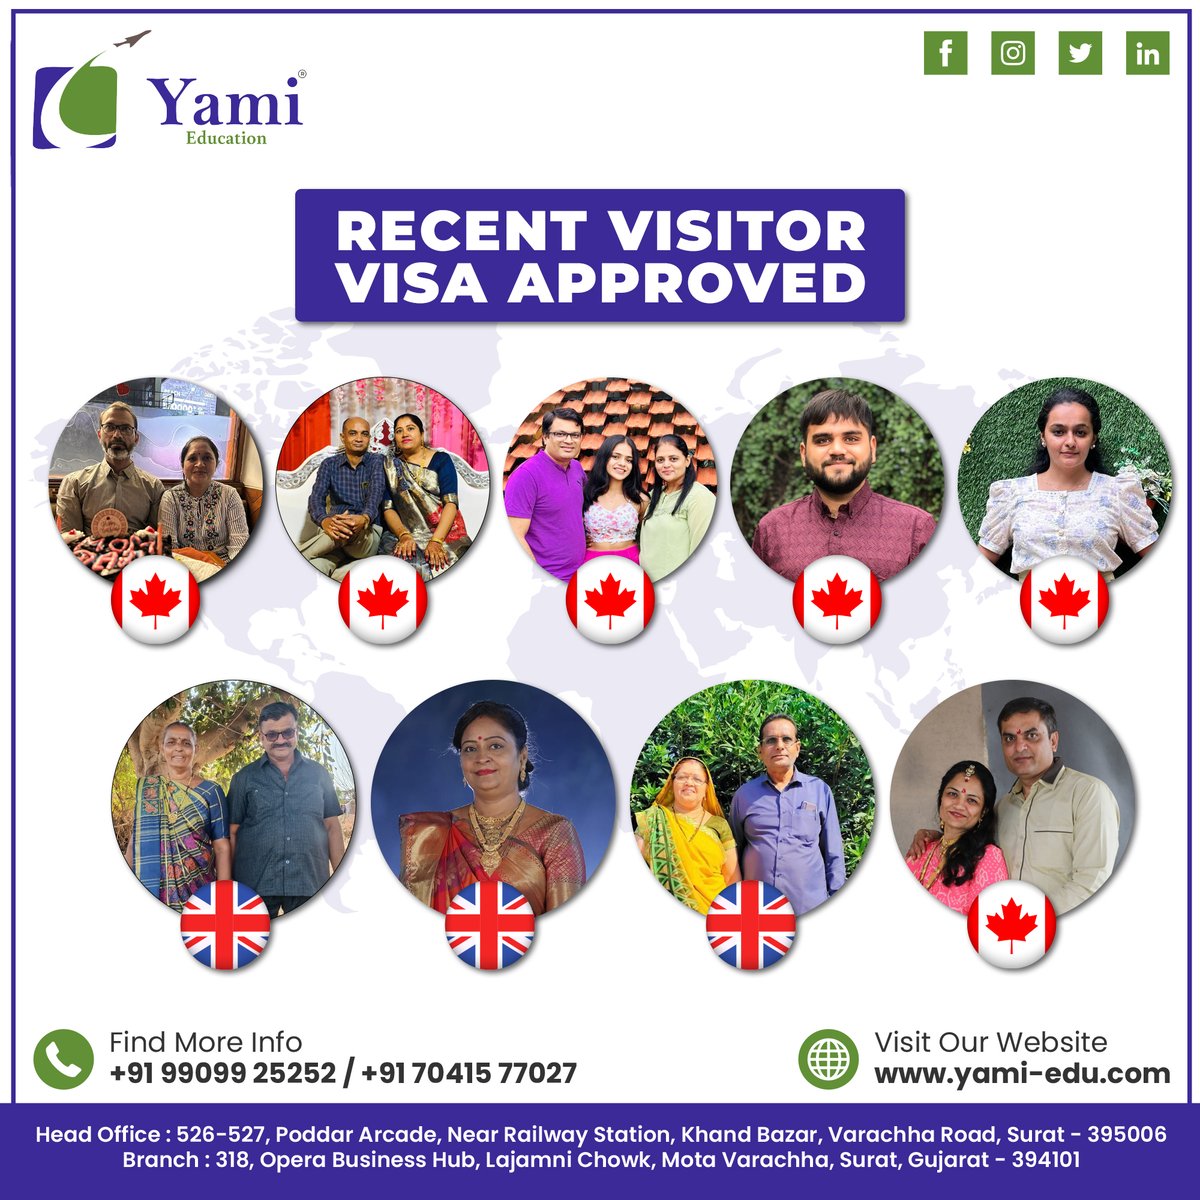 📢 Recent Visitor Visa Approved
Contact Details:
☎️ Call us +91 99099 25252 / +91 70415 77027
🌐 Visit Our Website yami-edu.com
#yami #yamiimmigration #visaapproved #traveldreams #passportready #adventureawaits #exploretheworld #visasuccess